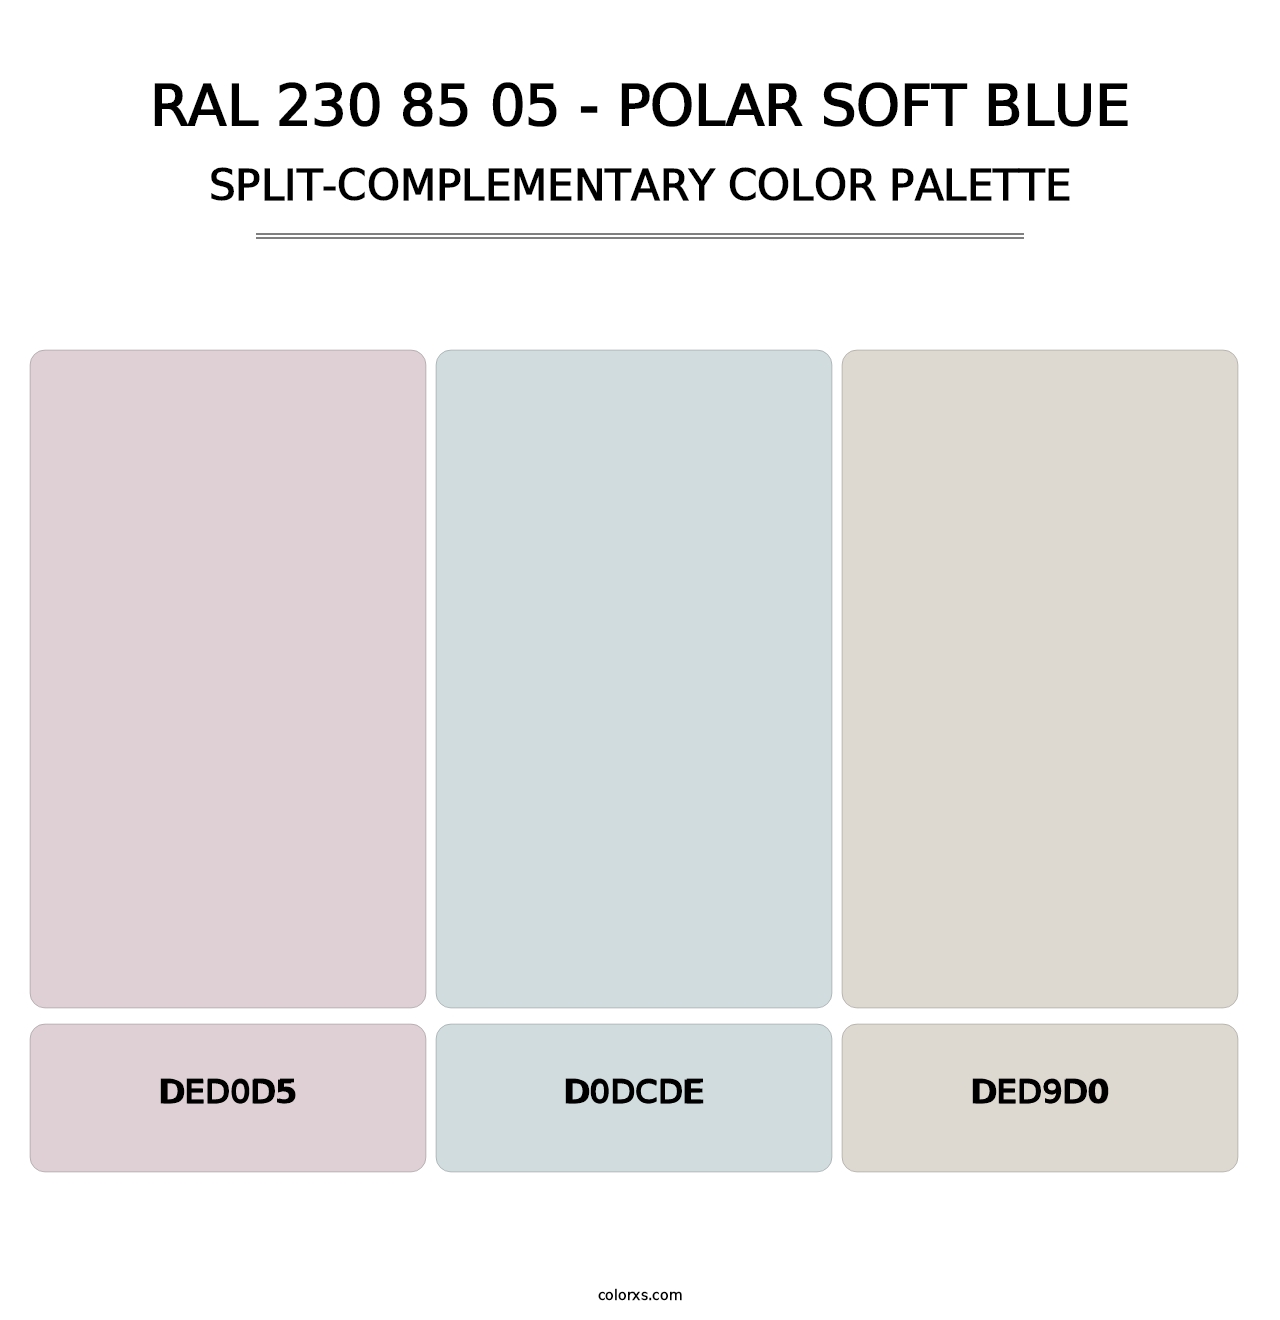 RAL 230 85 05 - Polar Soft Blue - Split-Complementary Color Palette